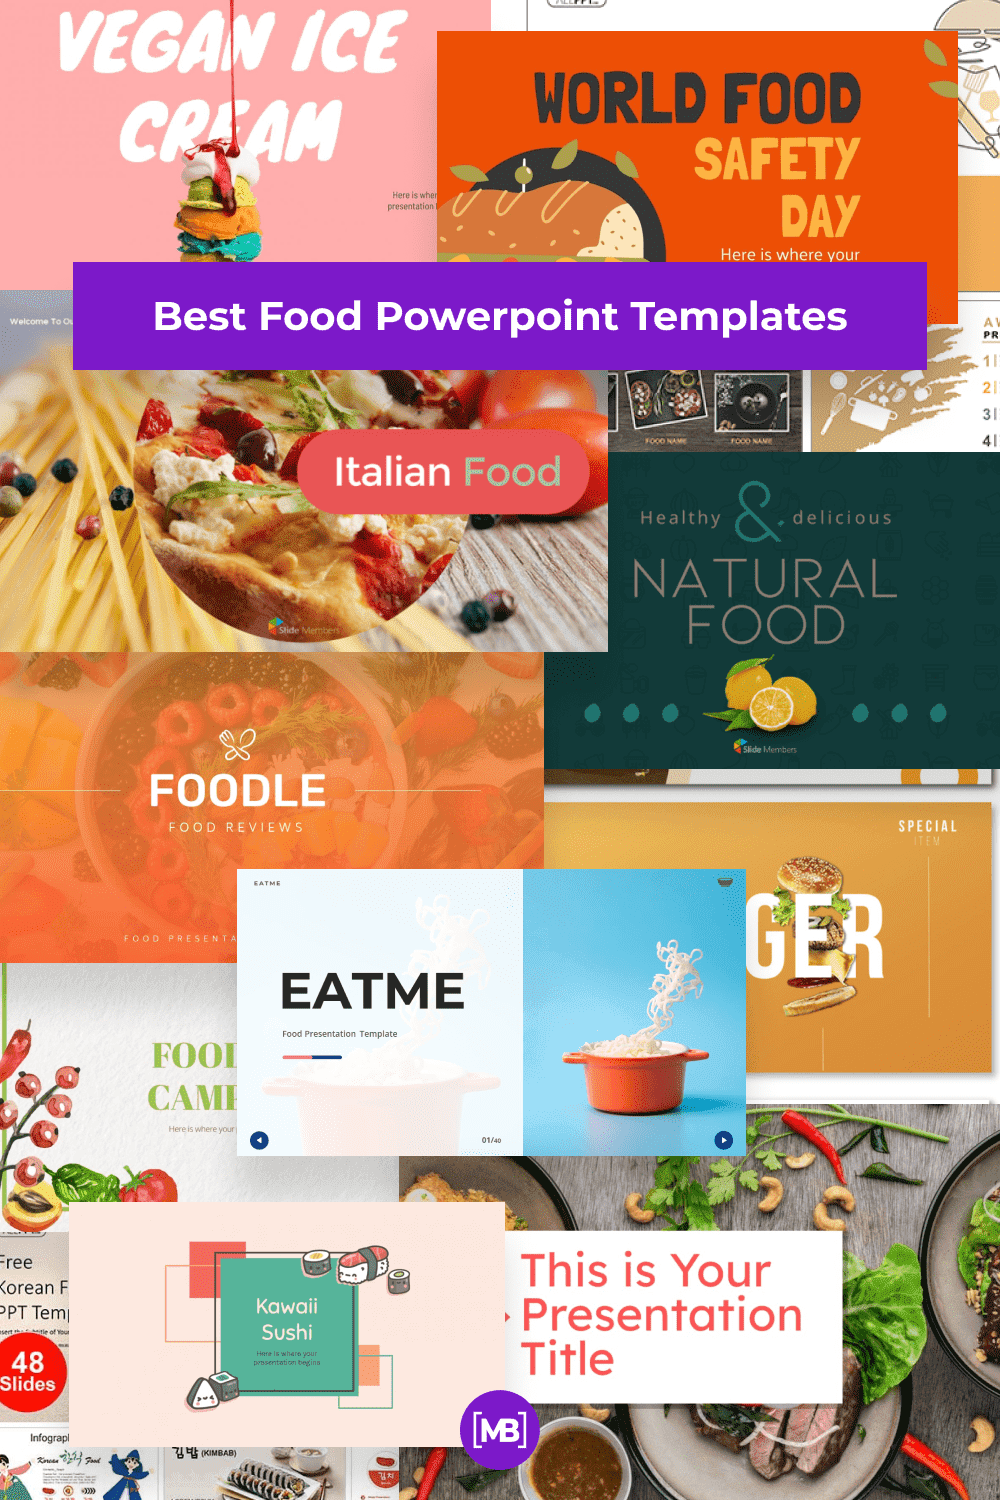 Best Food Powerpoint Templates Pinterest.